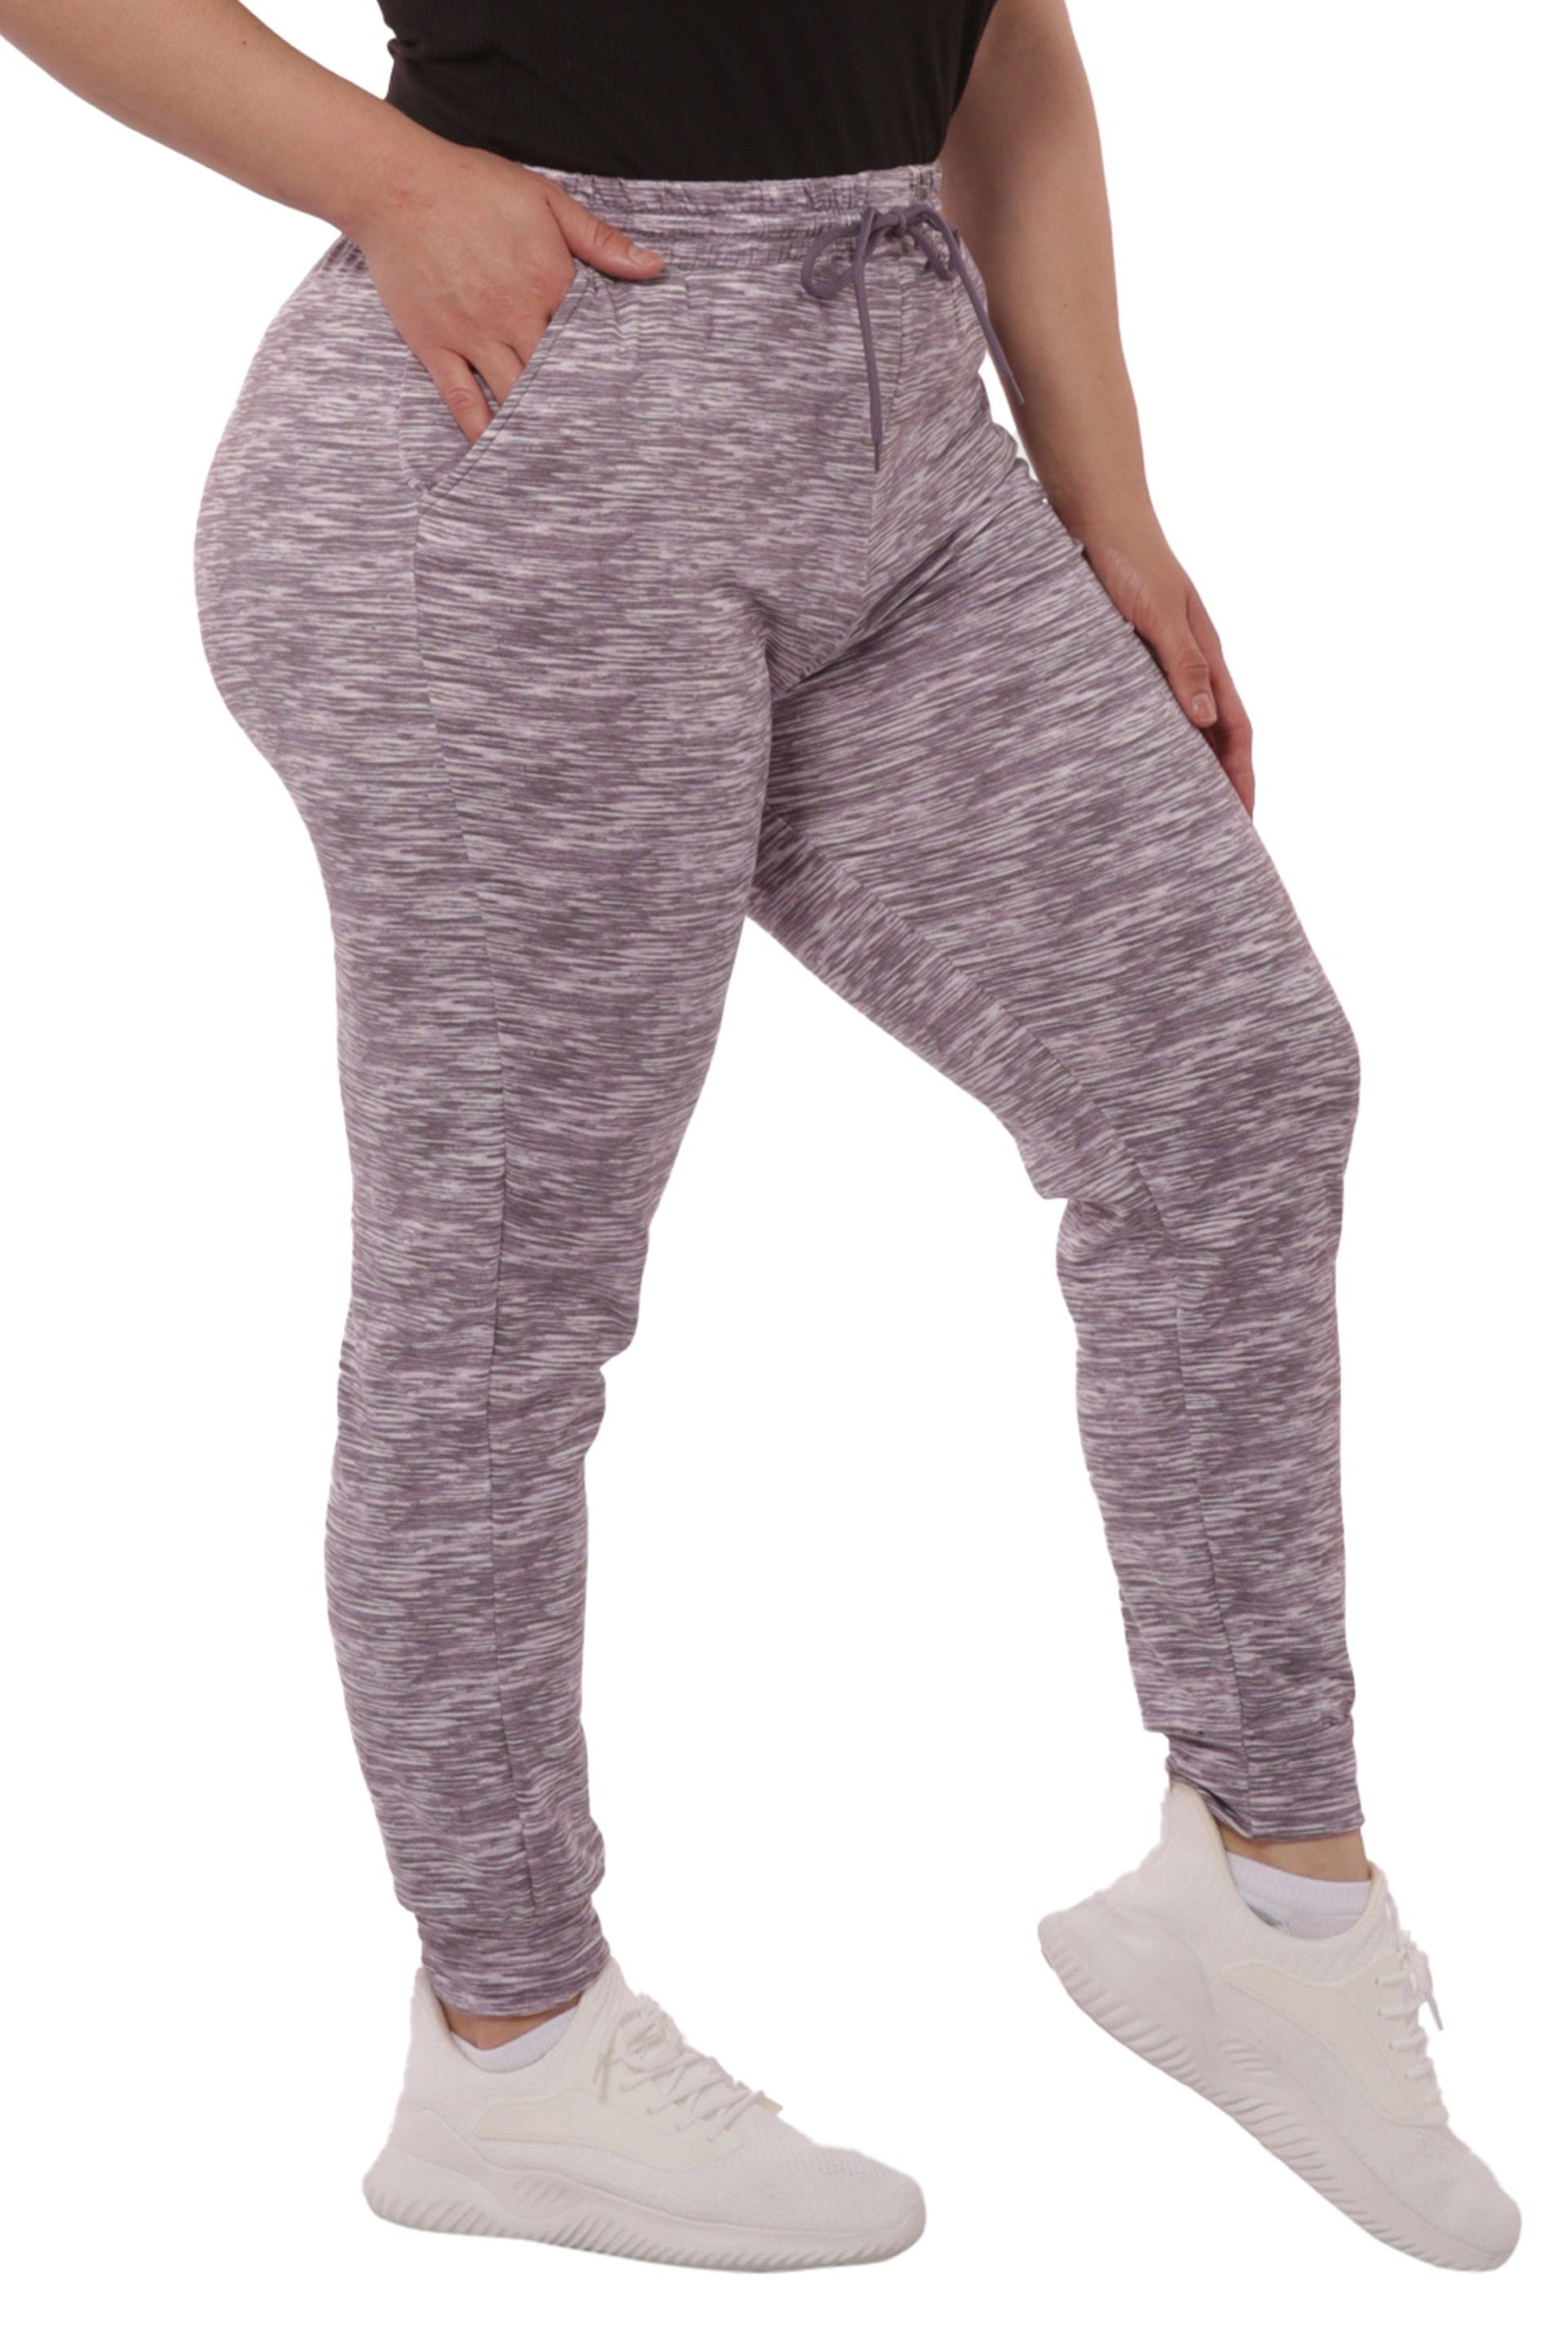 Plus Size Soft Brushed Fleece Lined Sweatpants - Lavender Space Dye - SHOSHO Fashion